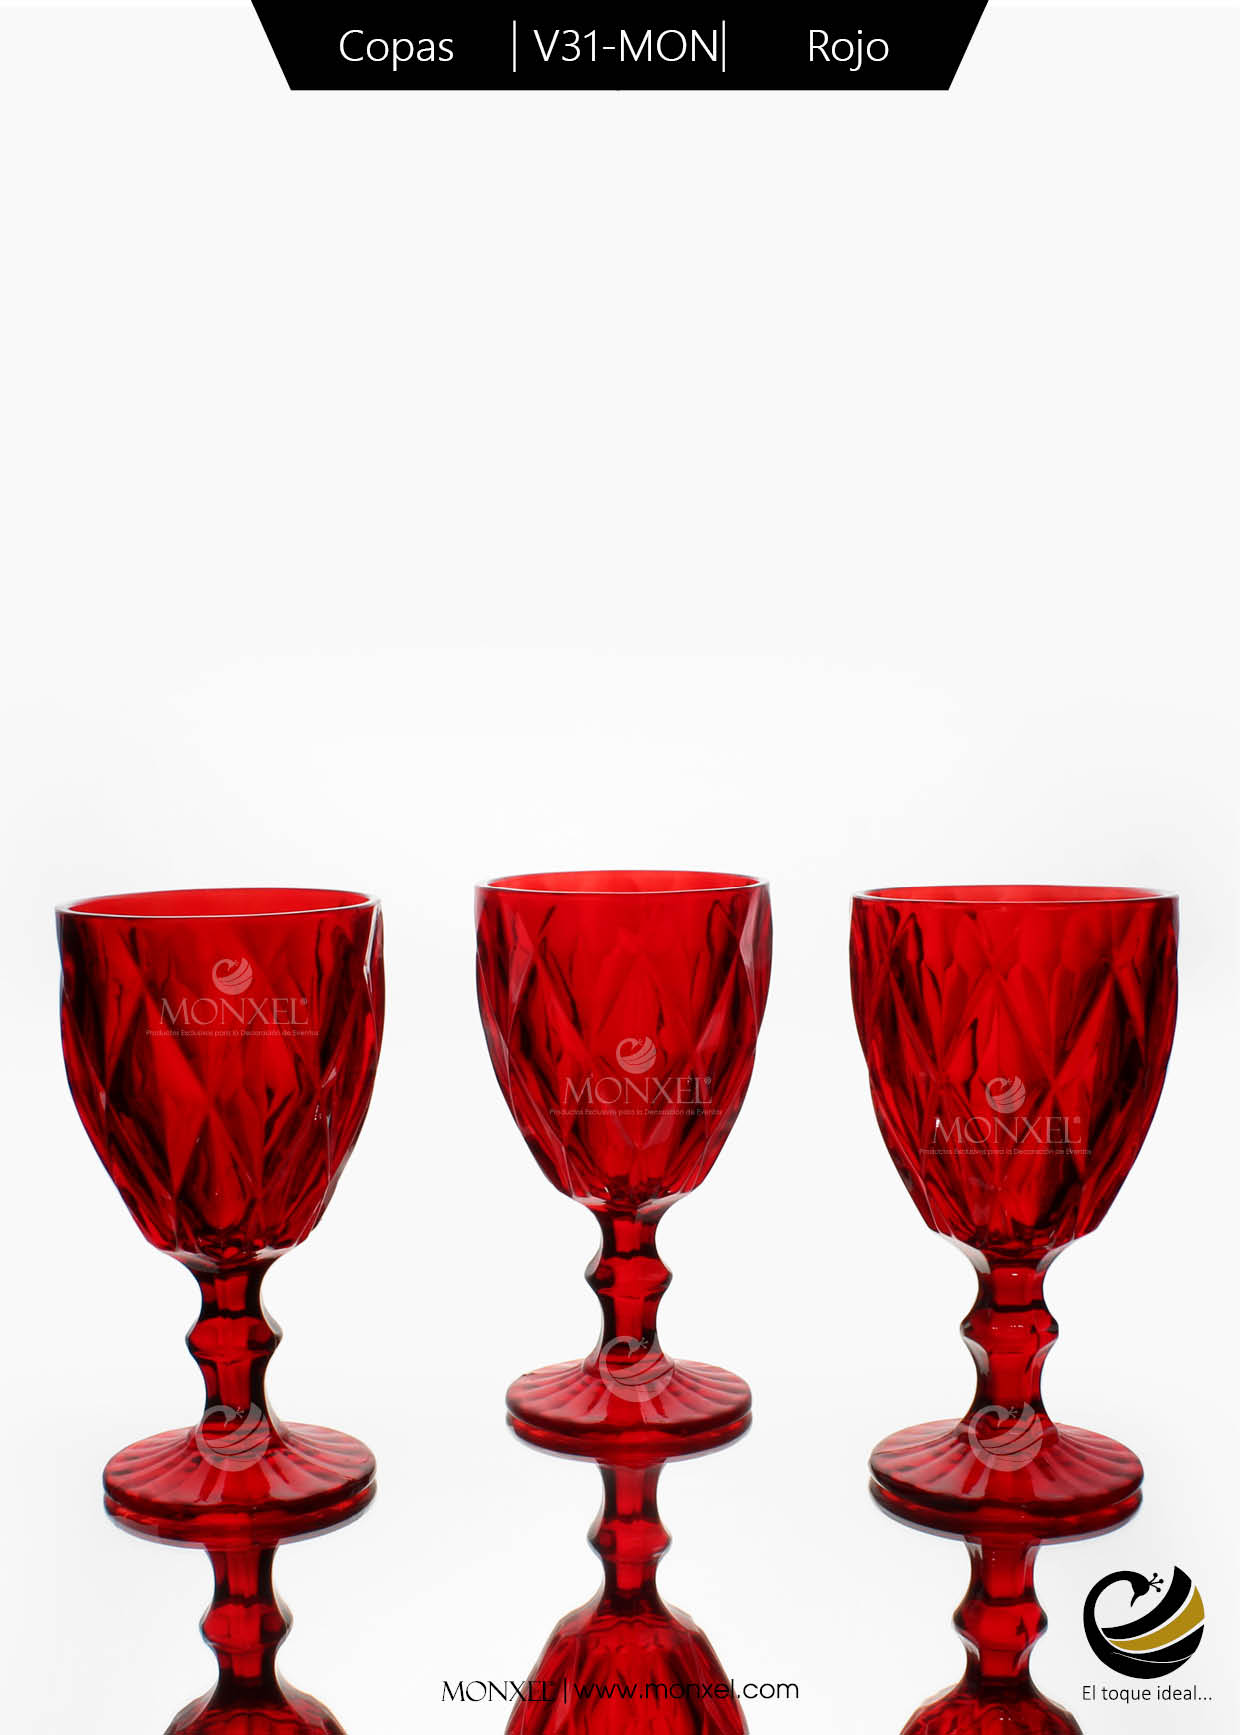 Copas V31-MON Rojo (Cristal)